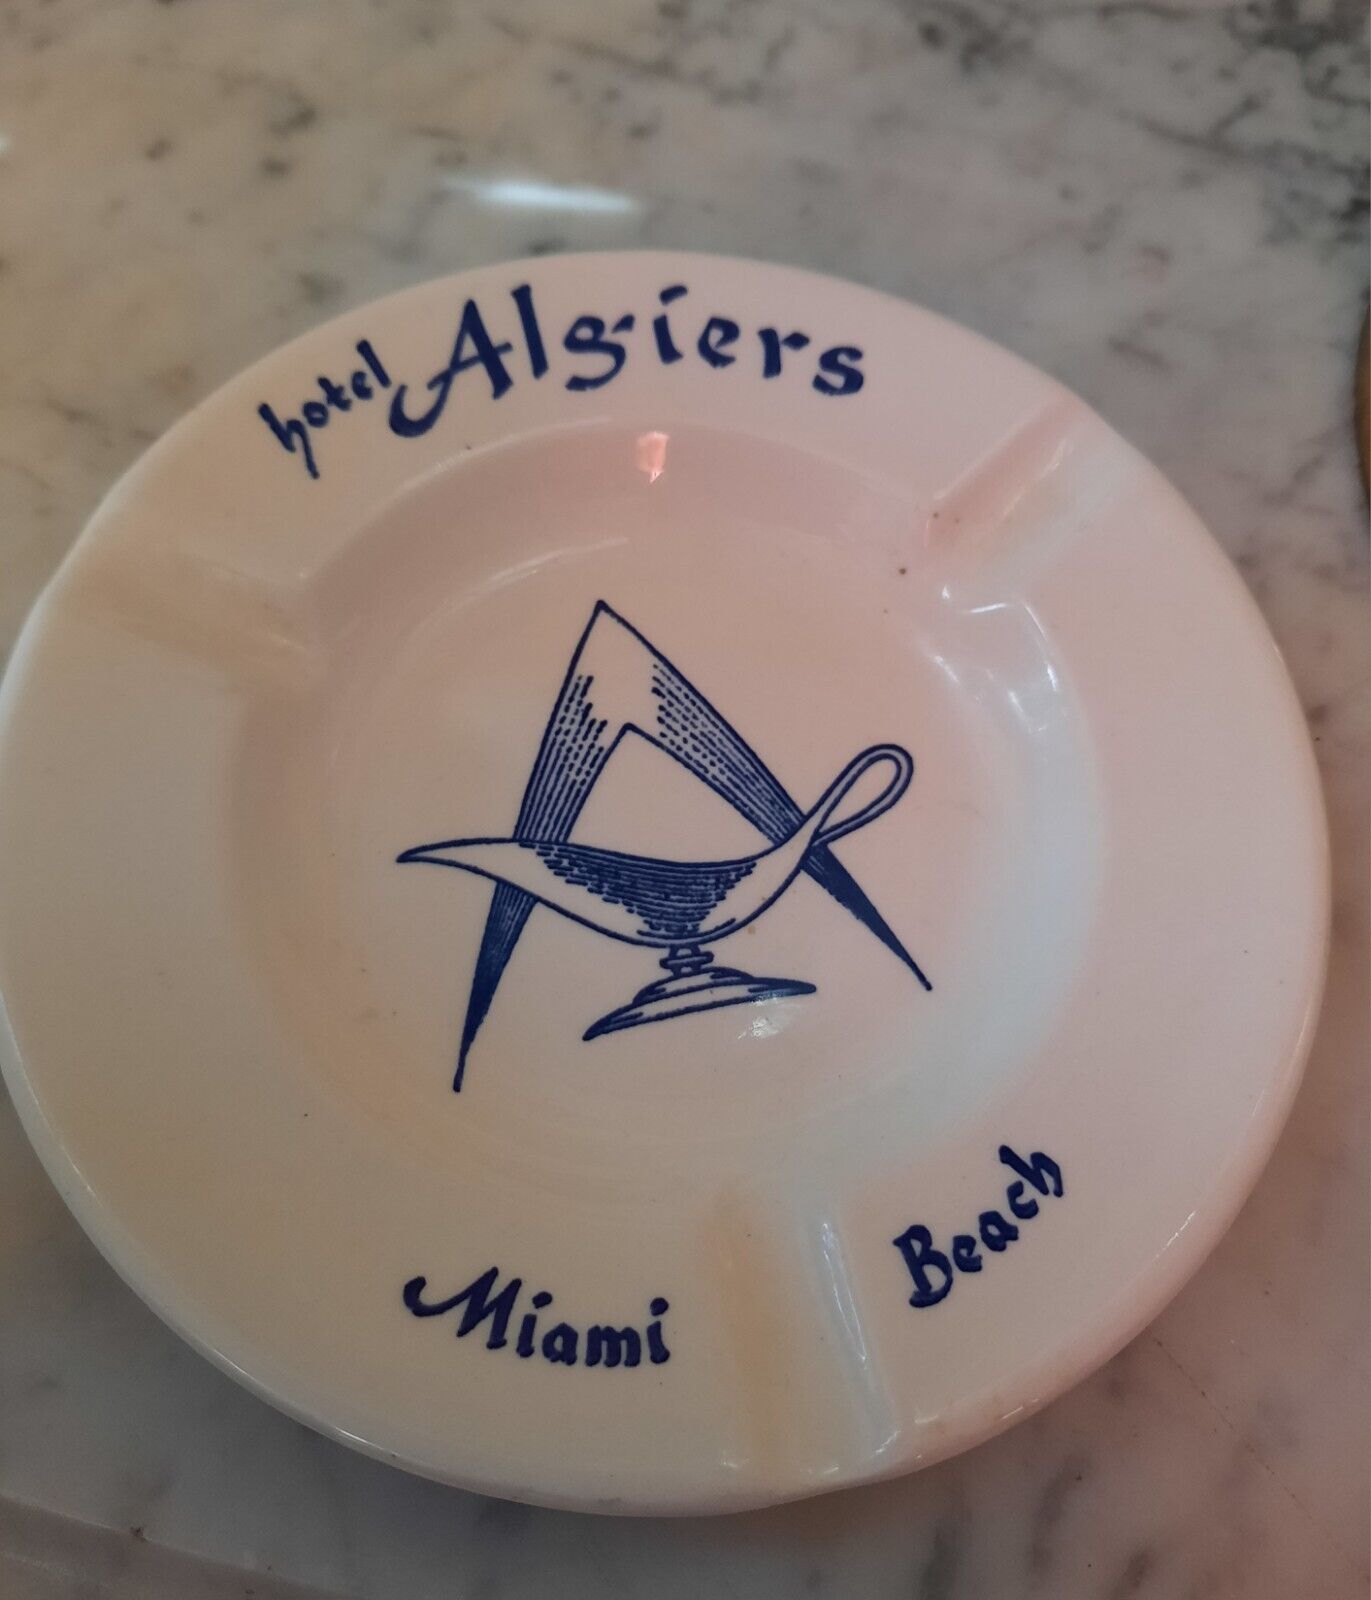 Hotel Algiers Miami Beach, Florida White Blue Royal China Ashtray Made in USA  